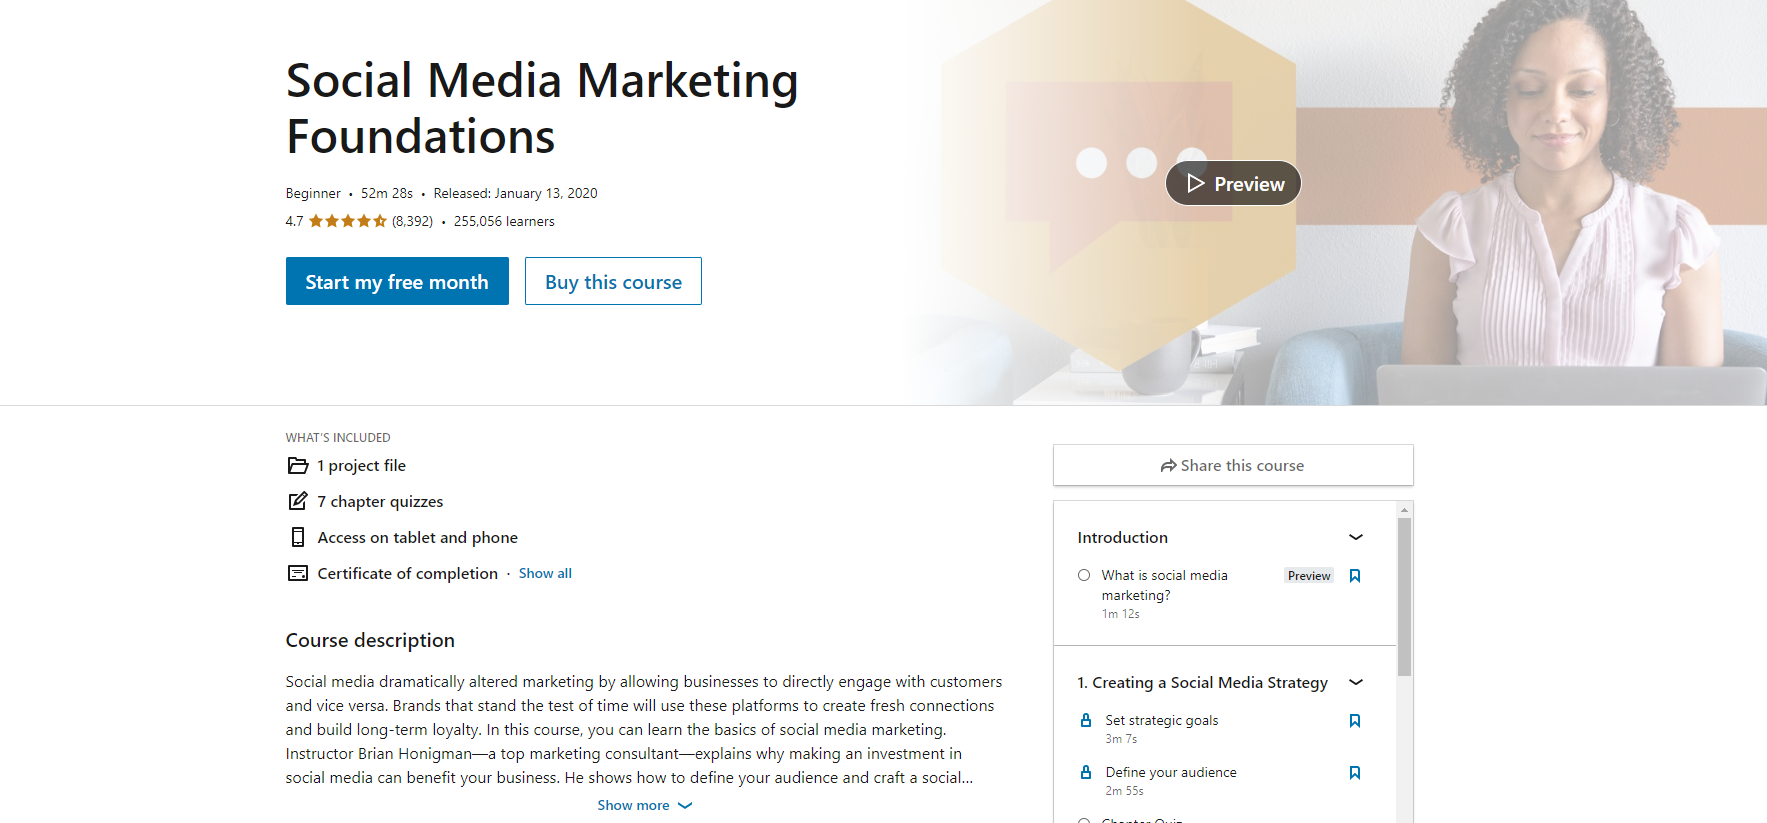 screenshot of LinkedIn Learning Social Media Marketing course smm